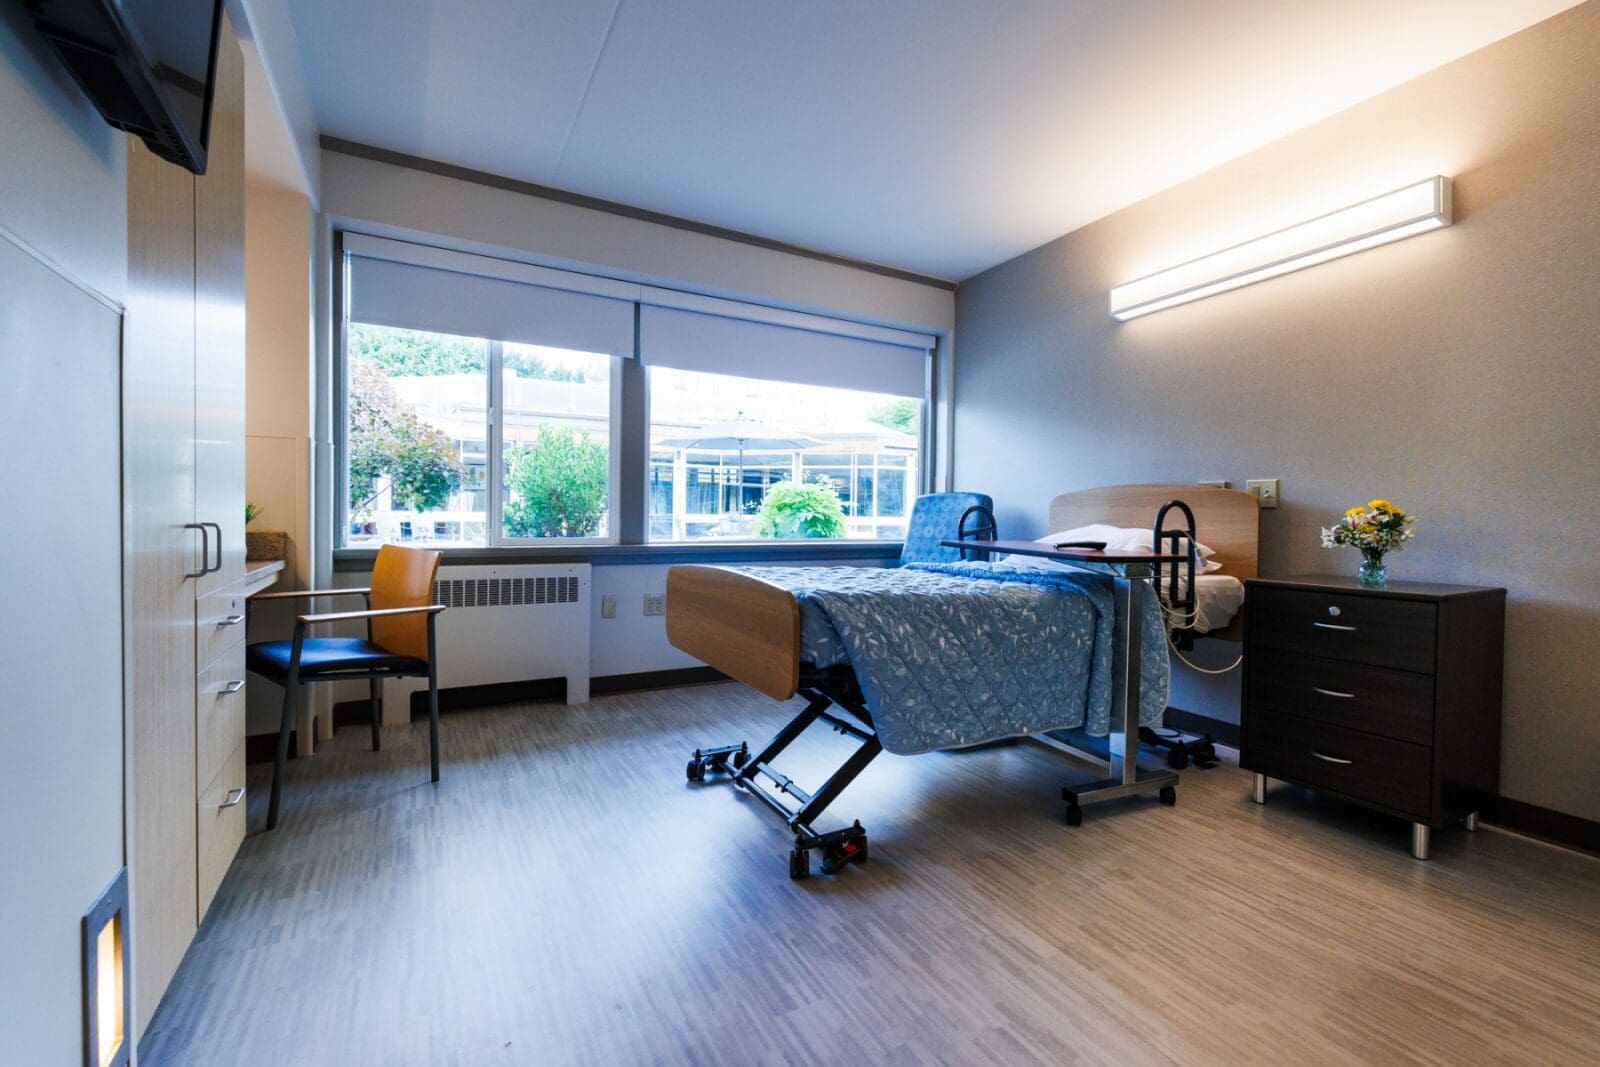 Hospice room